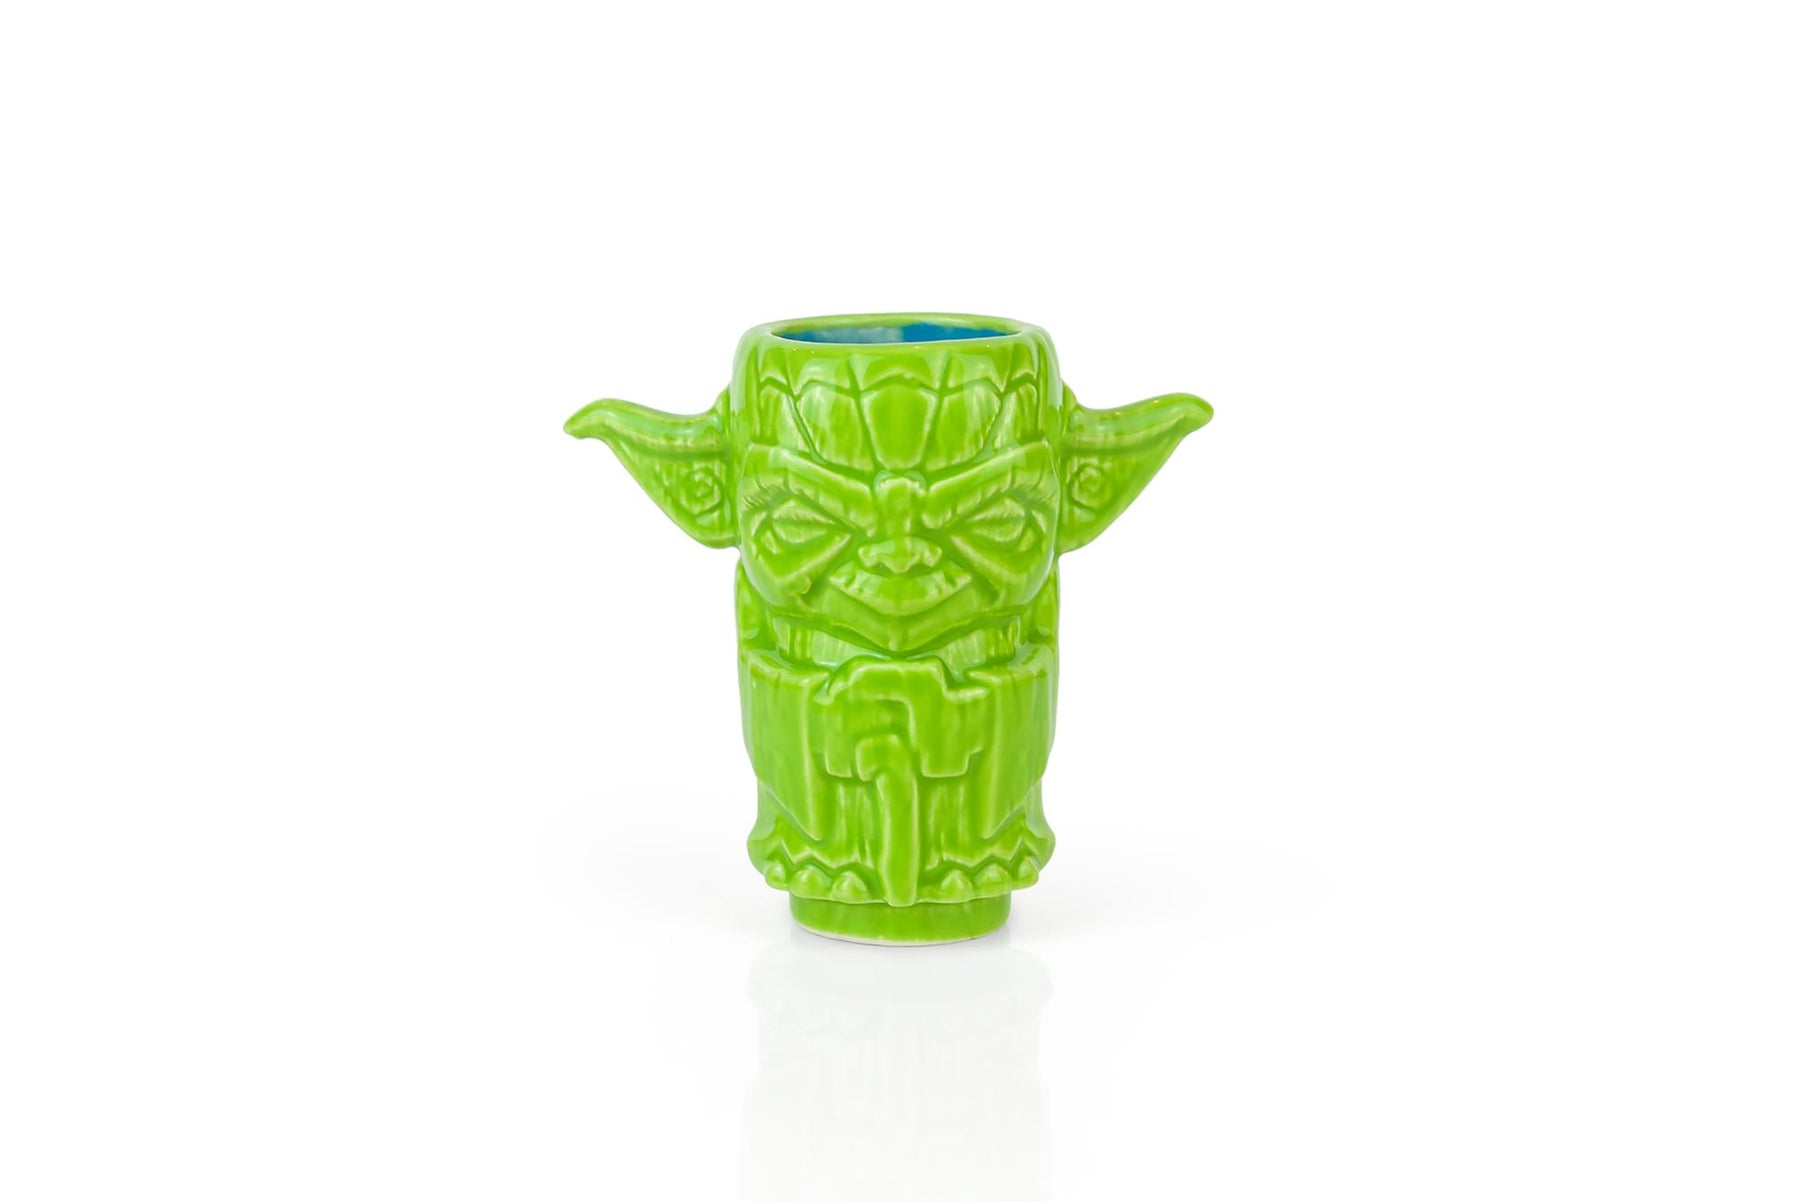 Geeki Tikis Star Wars Master Yoda Ceramic Mini Muglet | Holds 2 Ounces